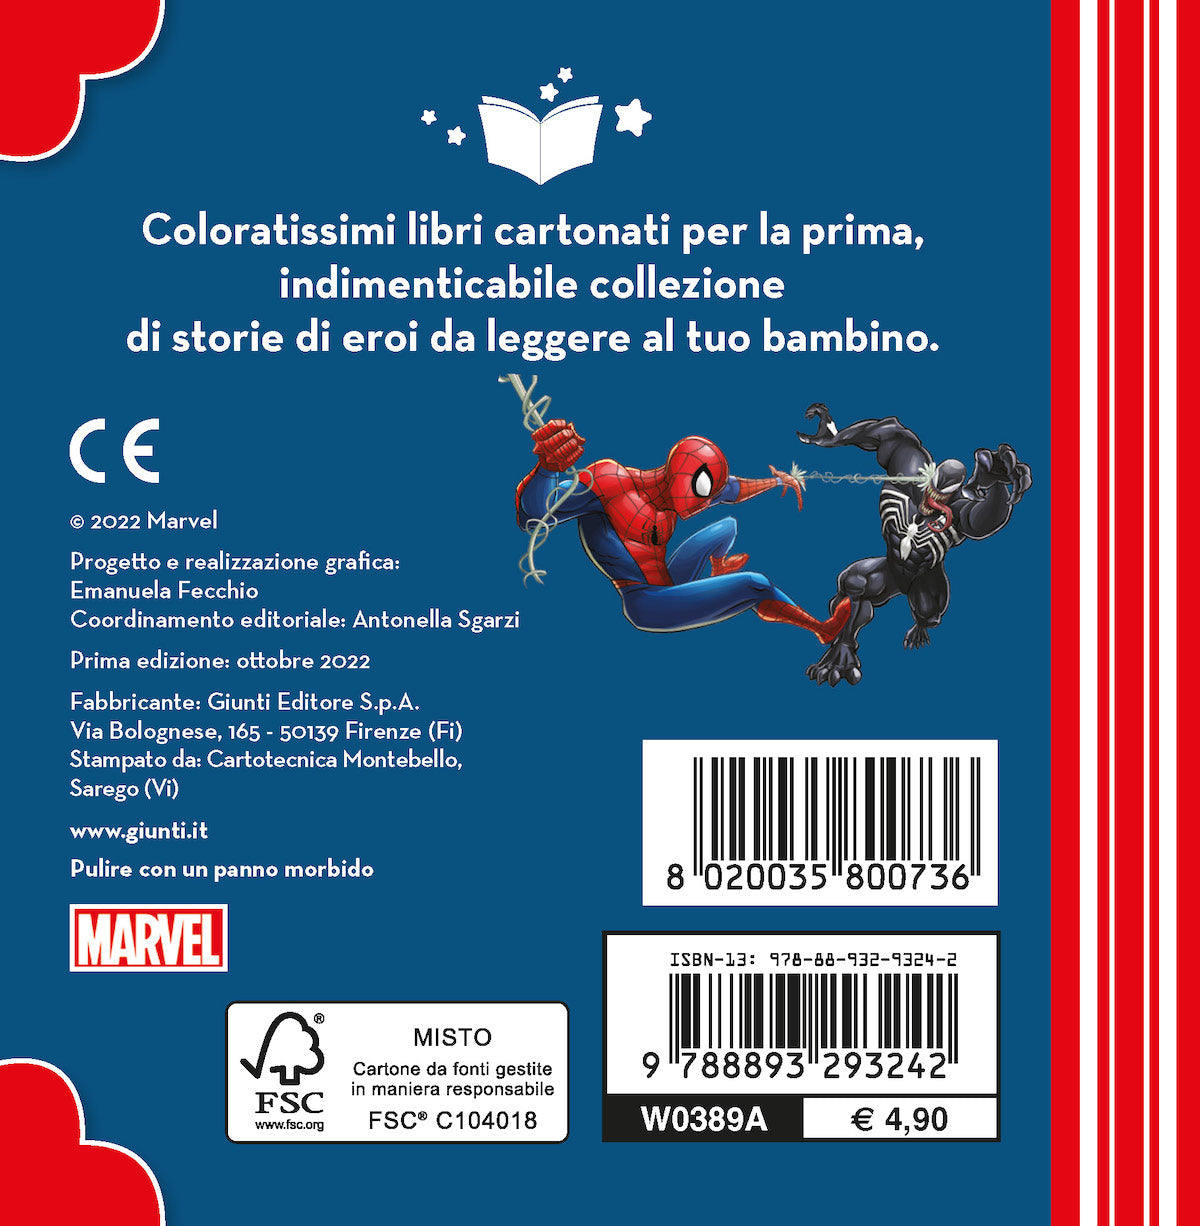 Spiderman I Librottini